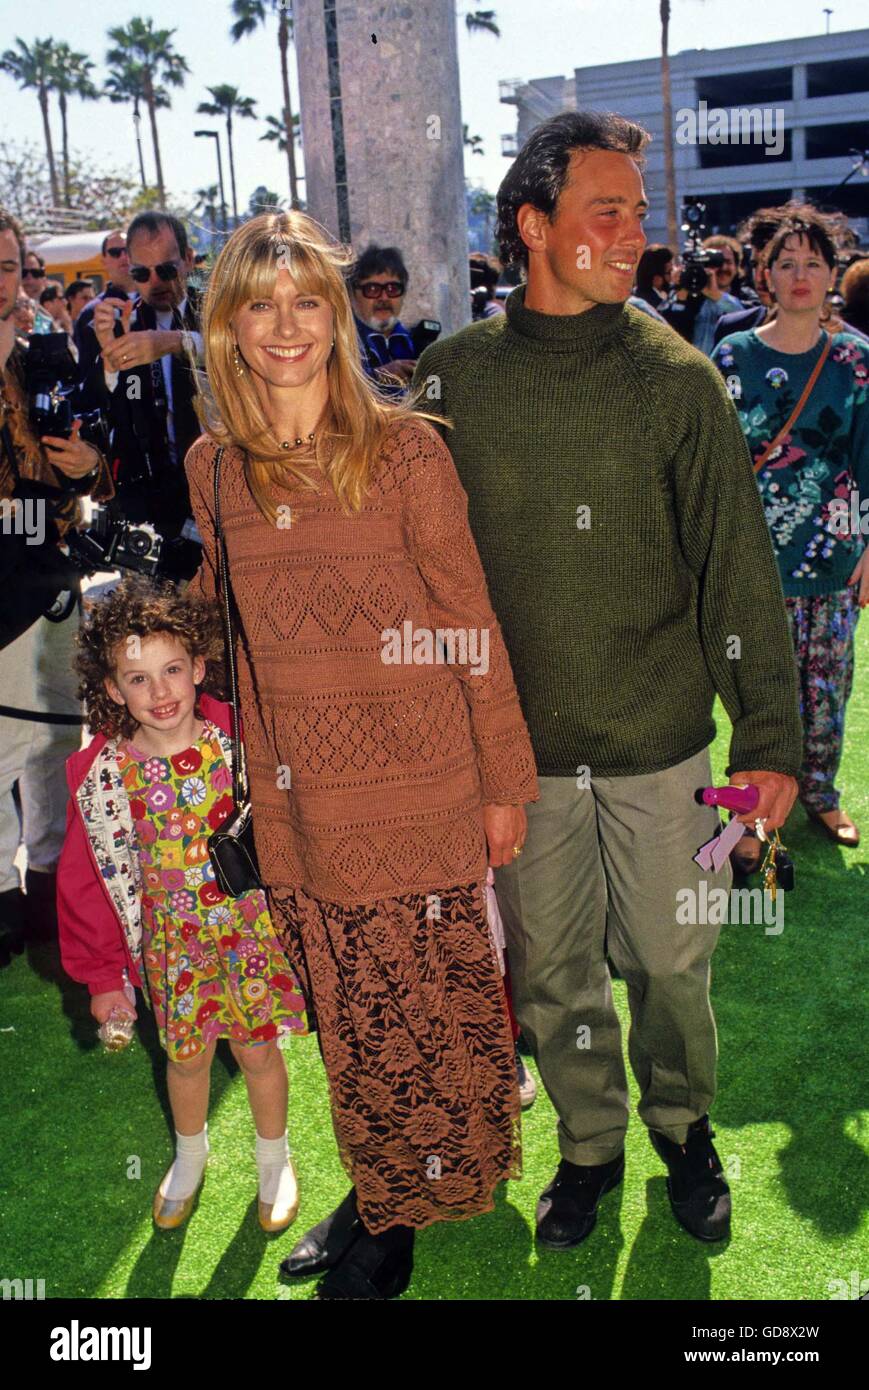 Olivia Newton John With Husband Matt Lattanzi And Daughter Chloe. 28th Mar,  2008. 1991 © Roger Karnbad/ZUMA Wire/Alamy Live News Stock Photo - Alamy